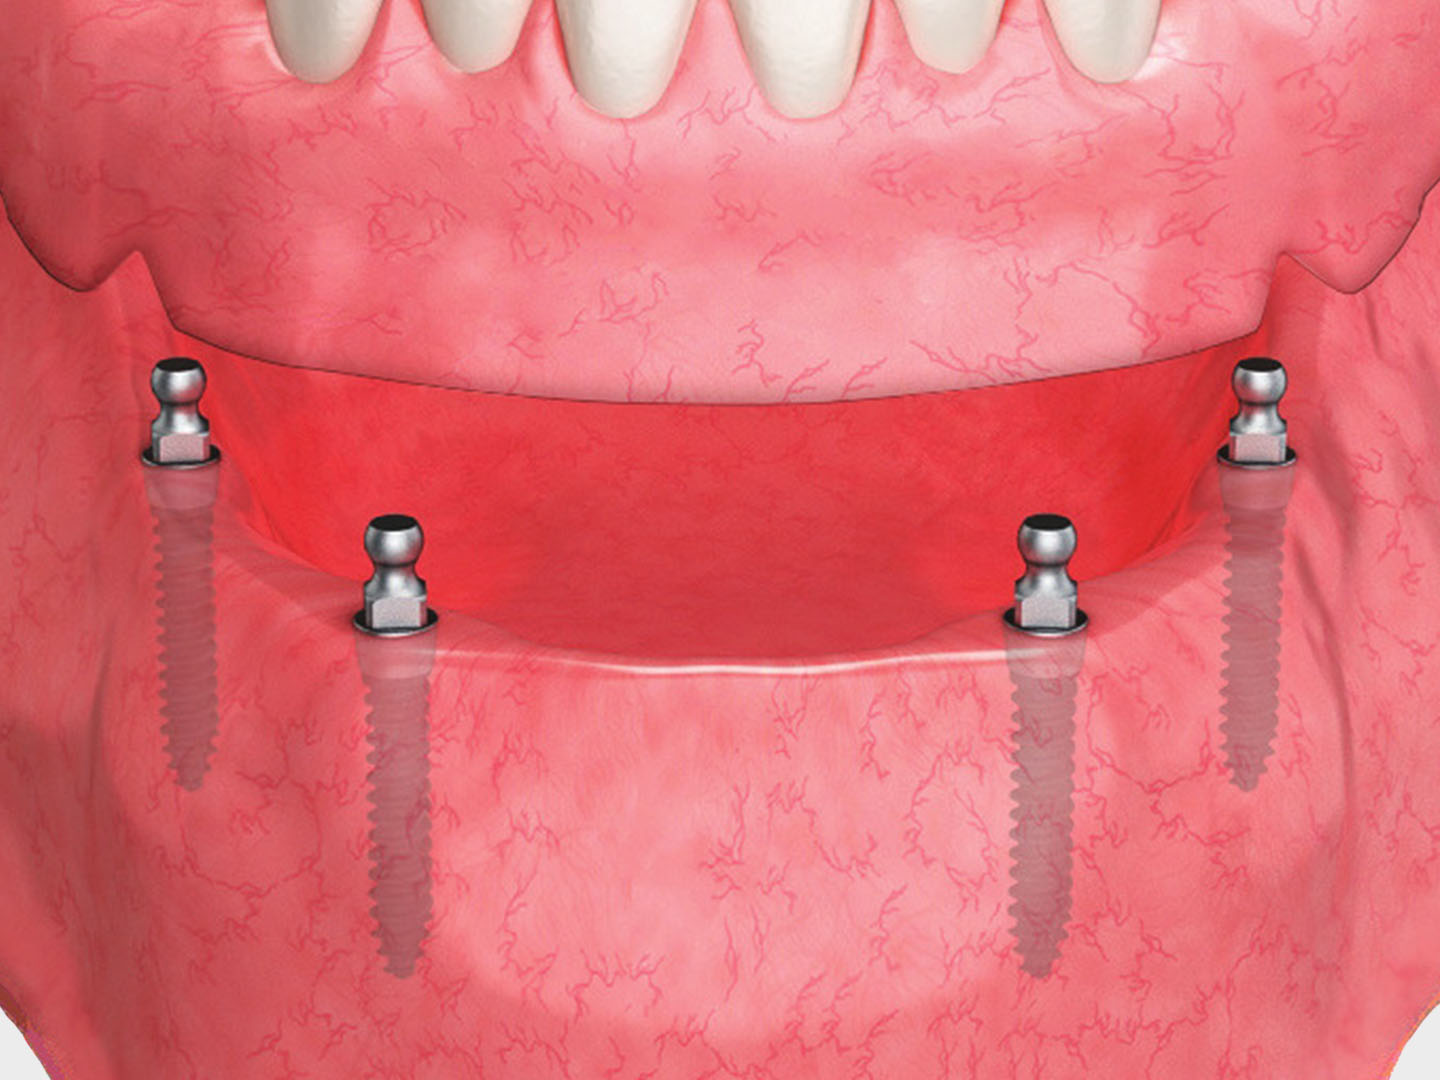 denture-ms-implant.jpg